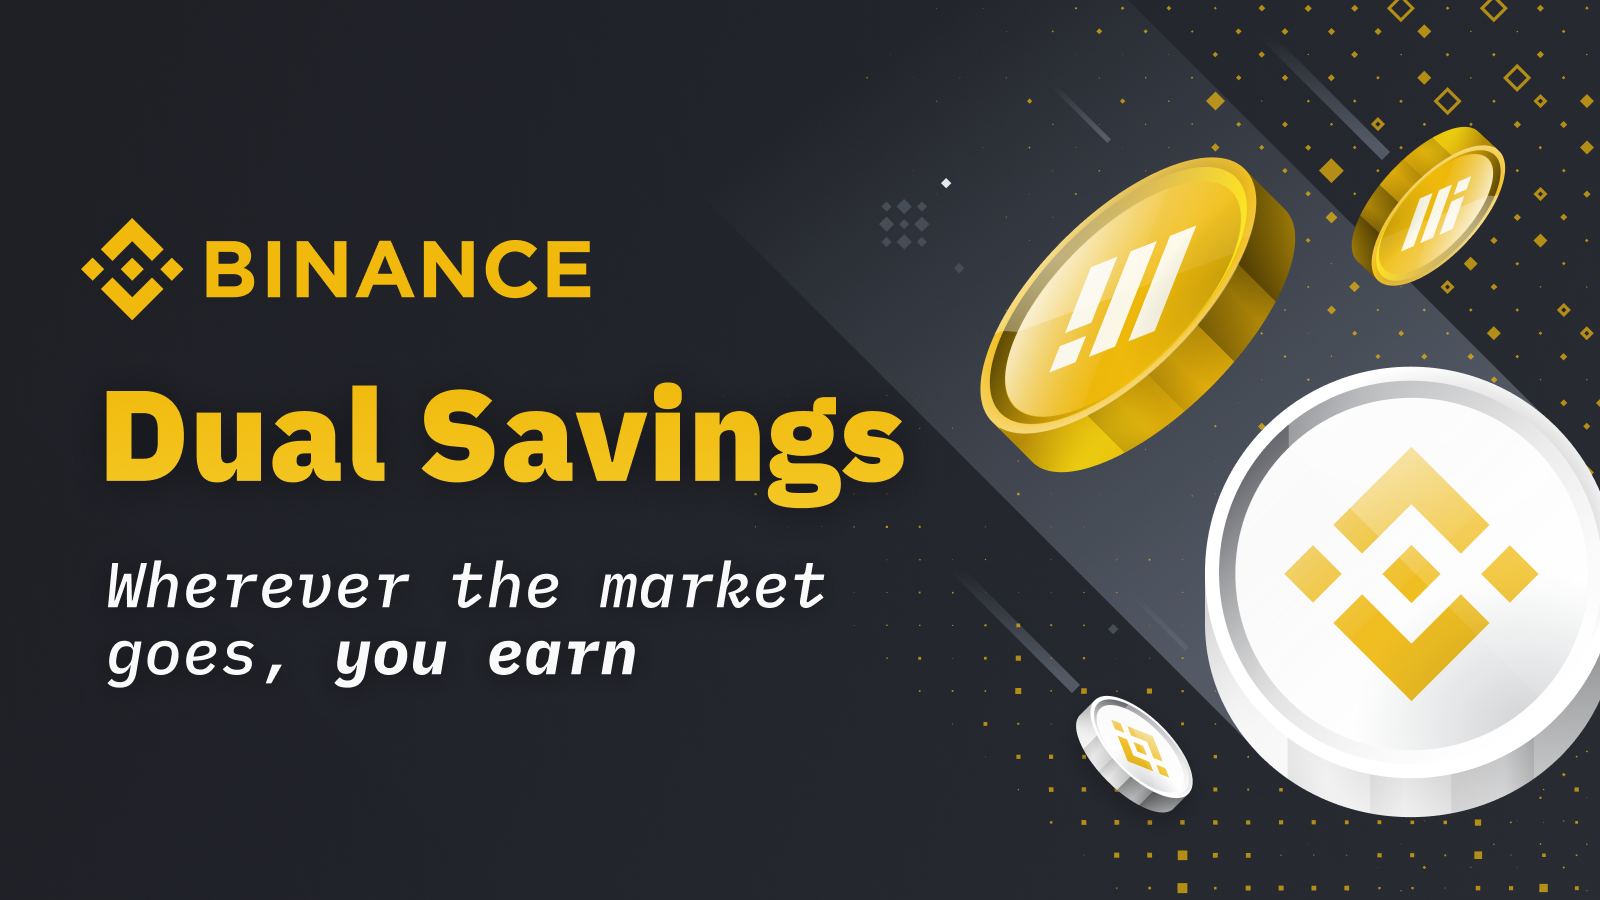 Binance Dual Savings: Earn Wherever the Market Goes